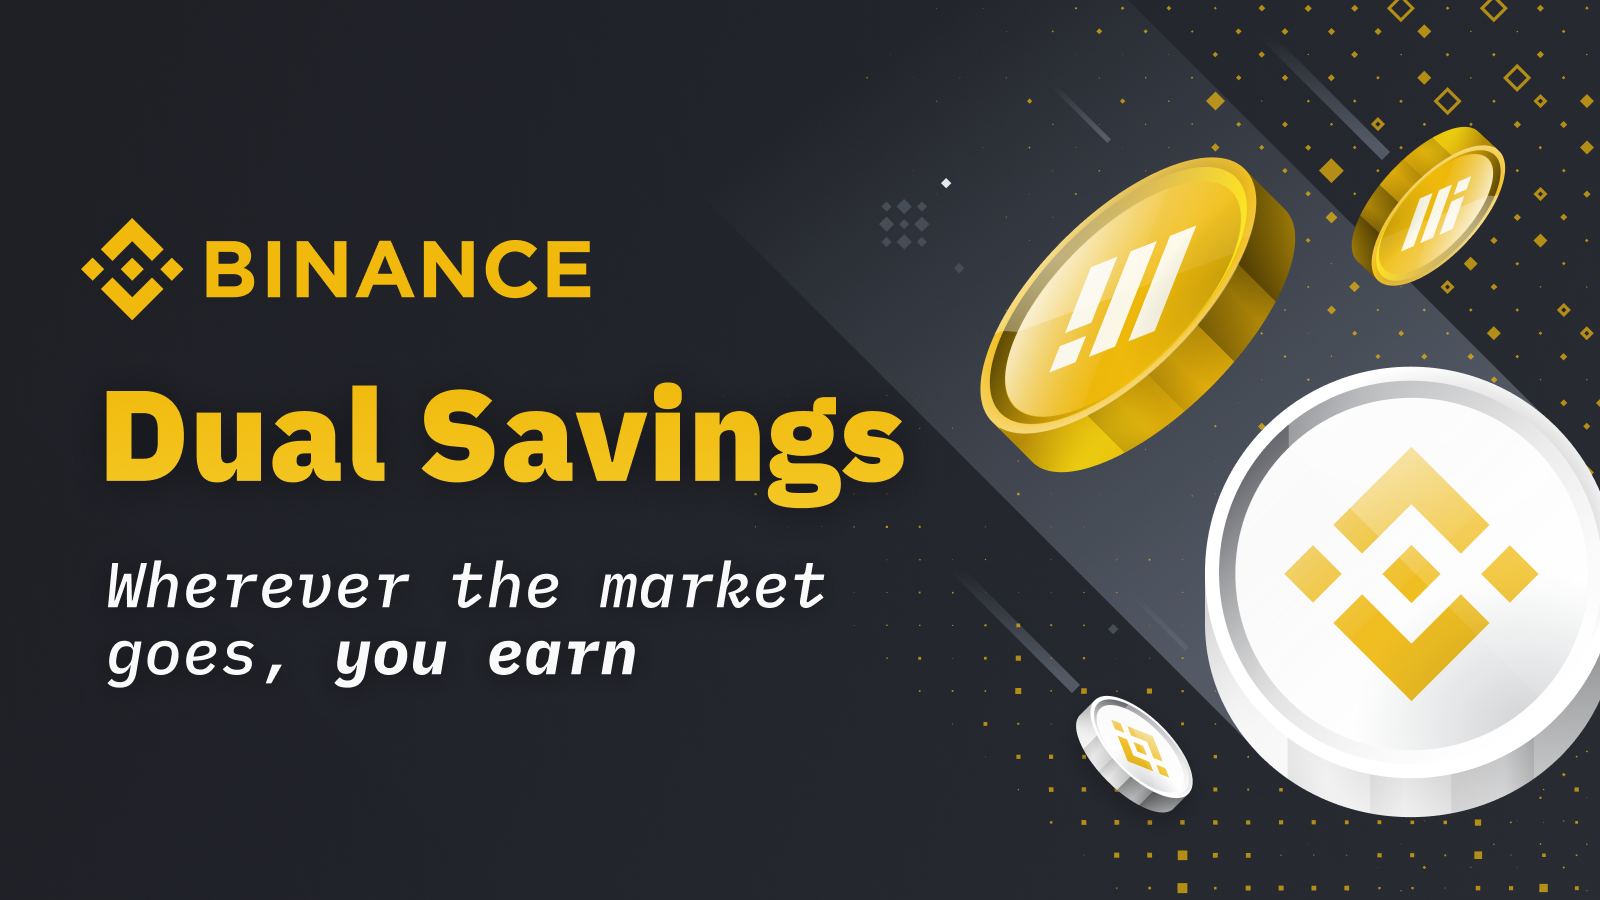 Binance Dual Savings: Earn Wherever the Market Goes